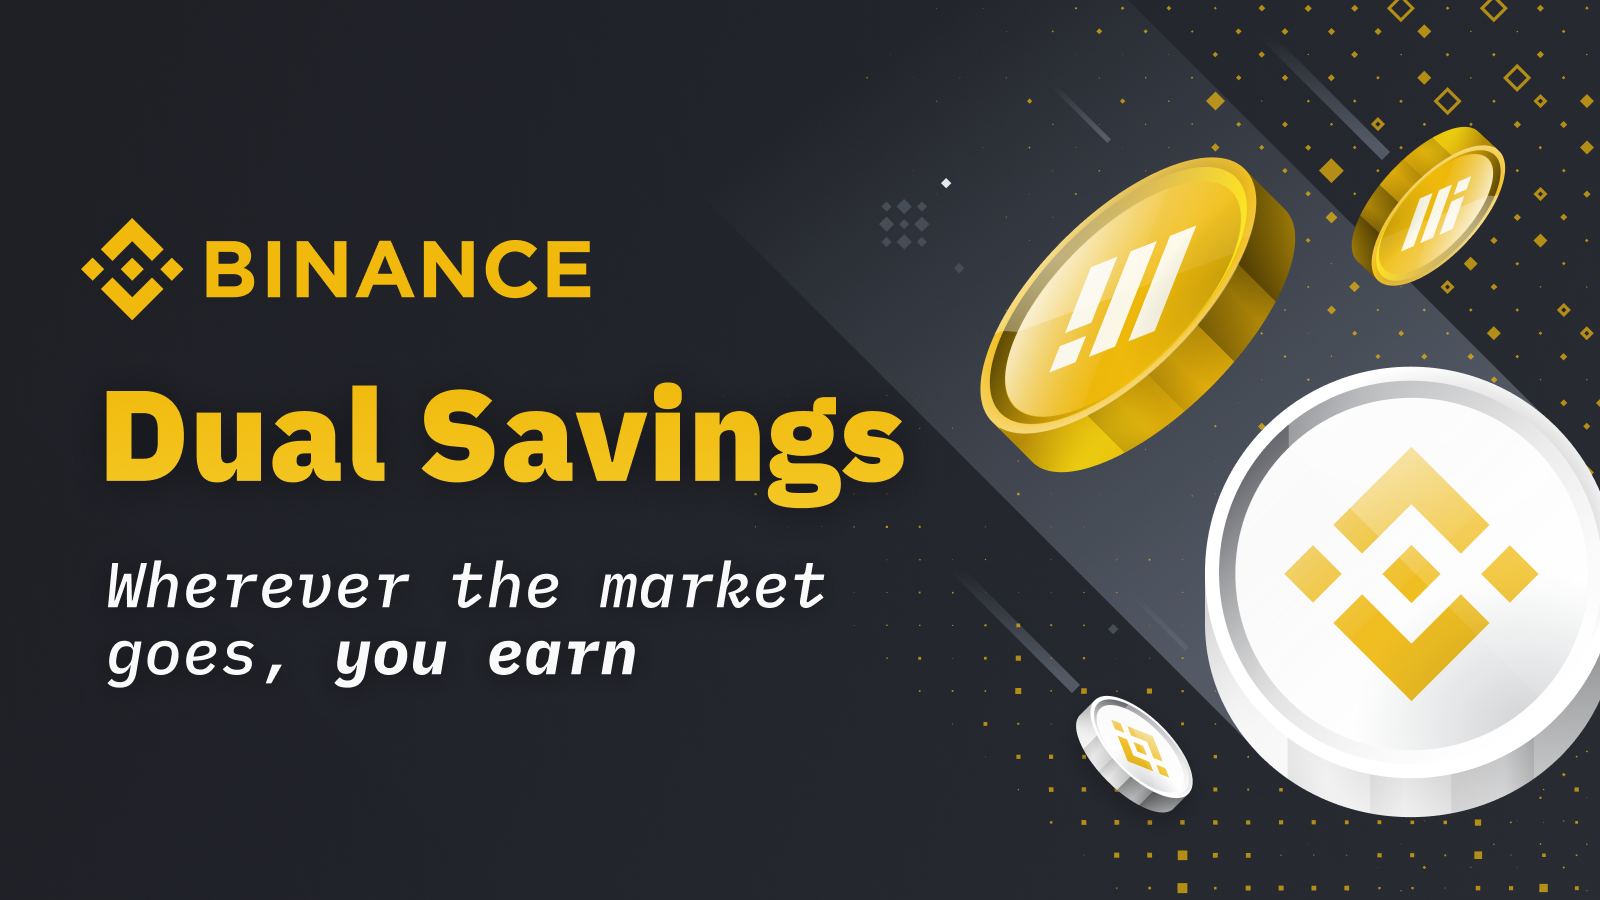 Binance Dual Savings: Earn Wherever the Market Goes